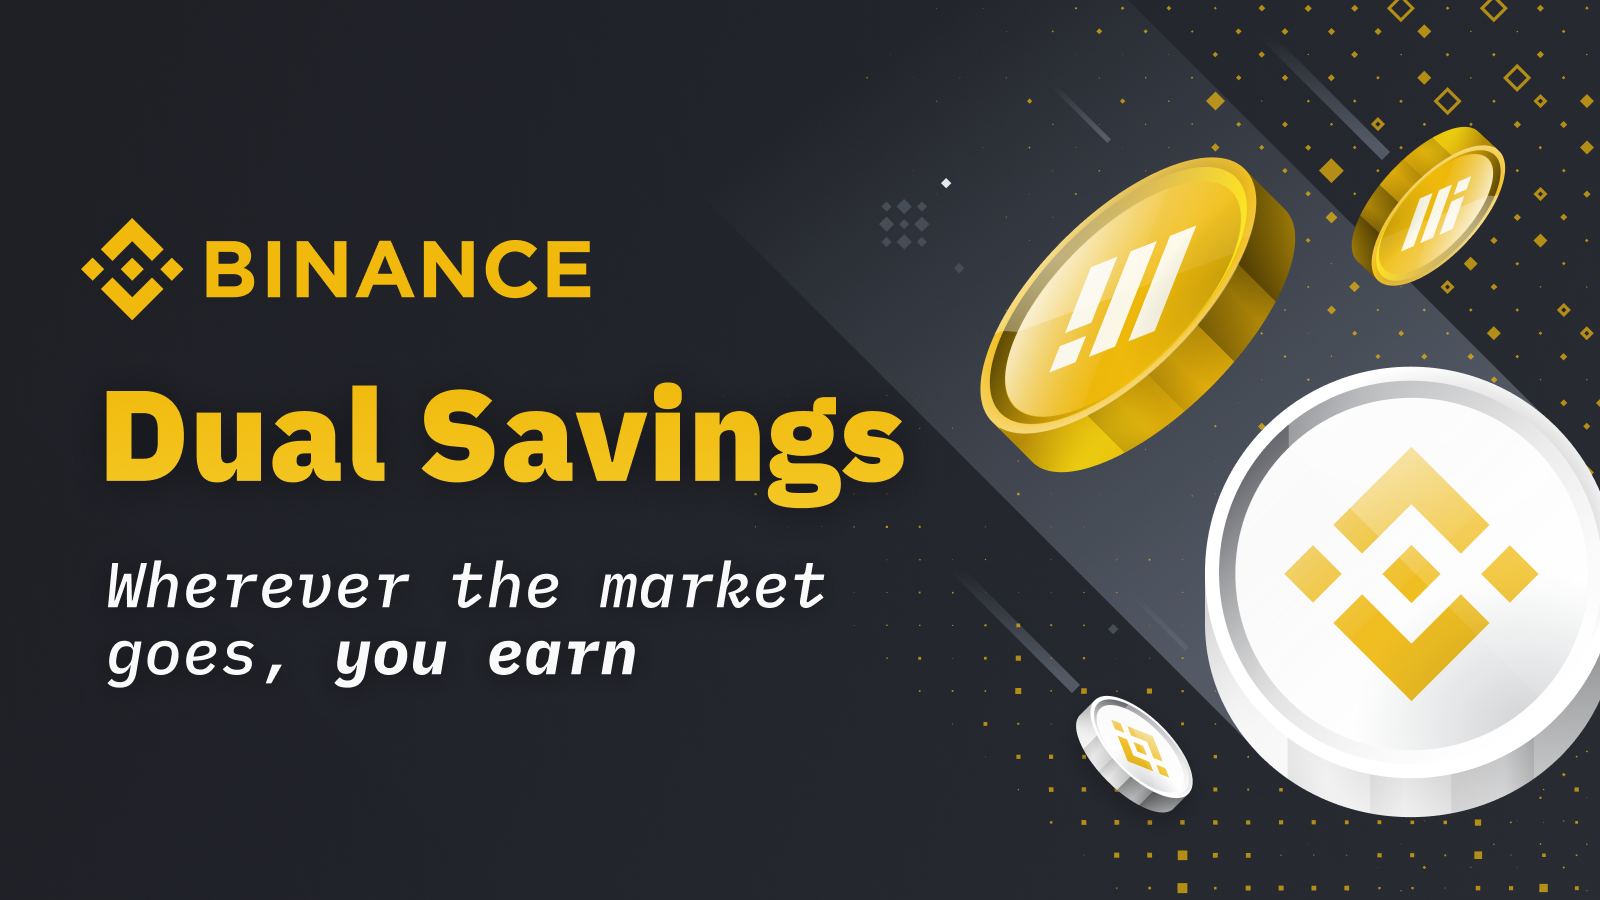 Binance Dual Savings: Earn Wherever the Market Goes